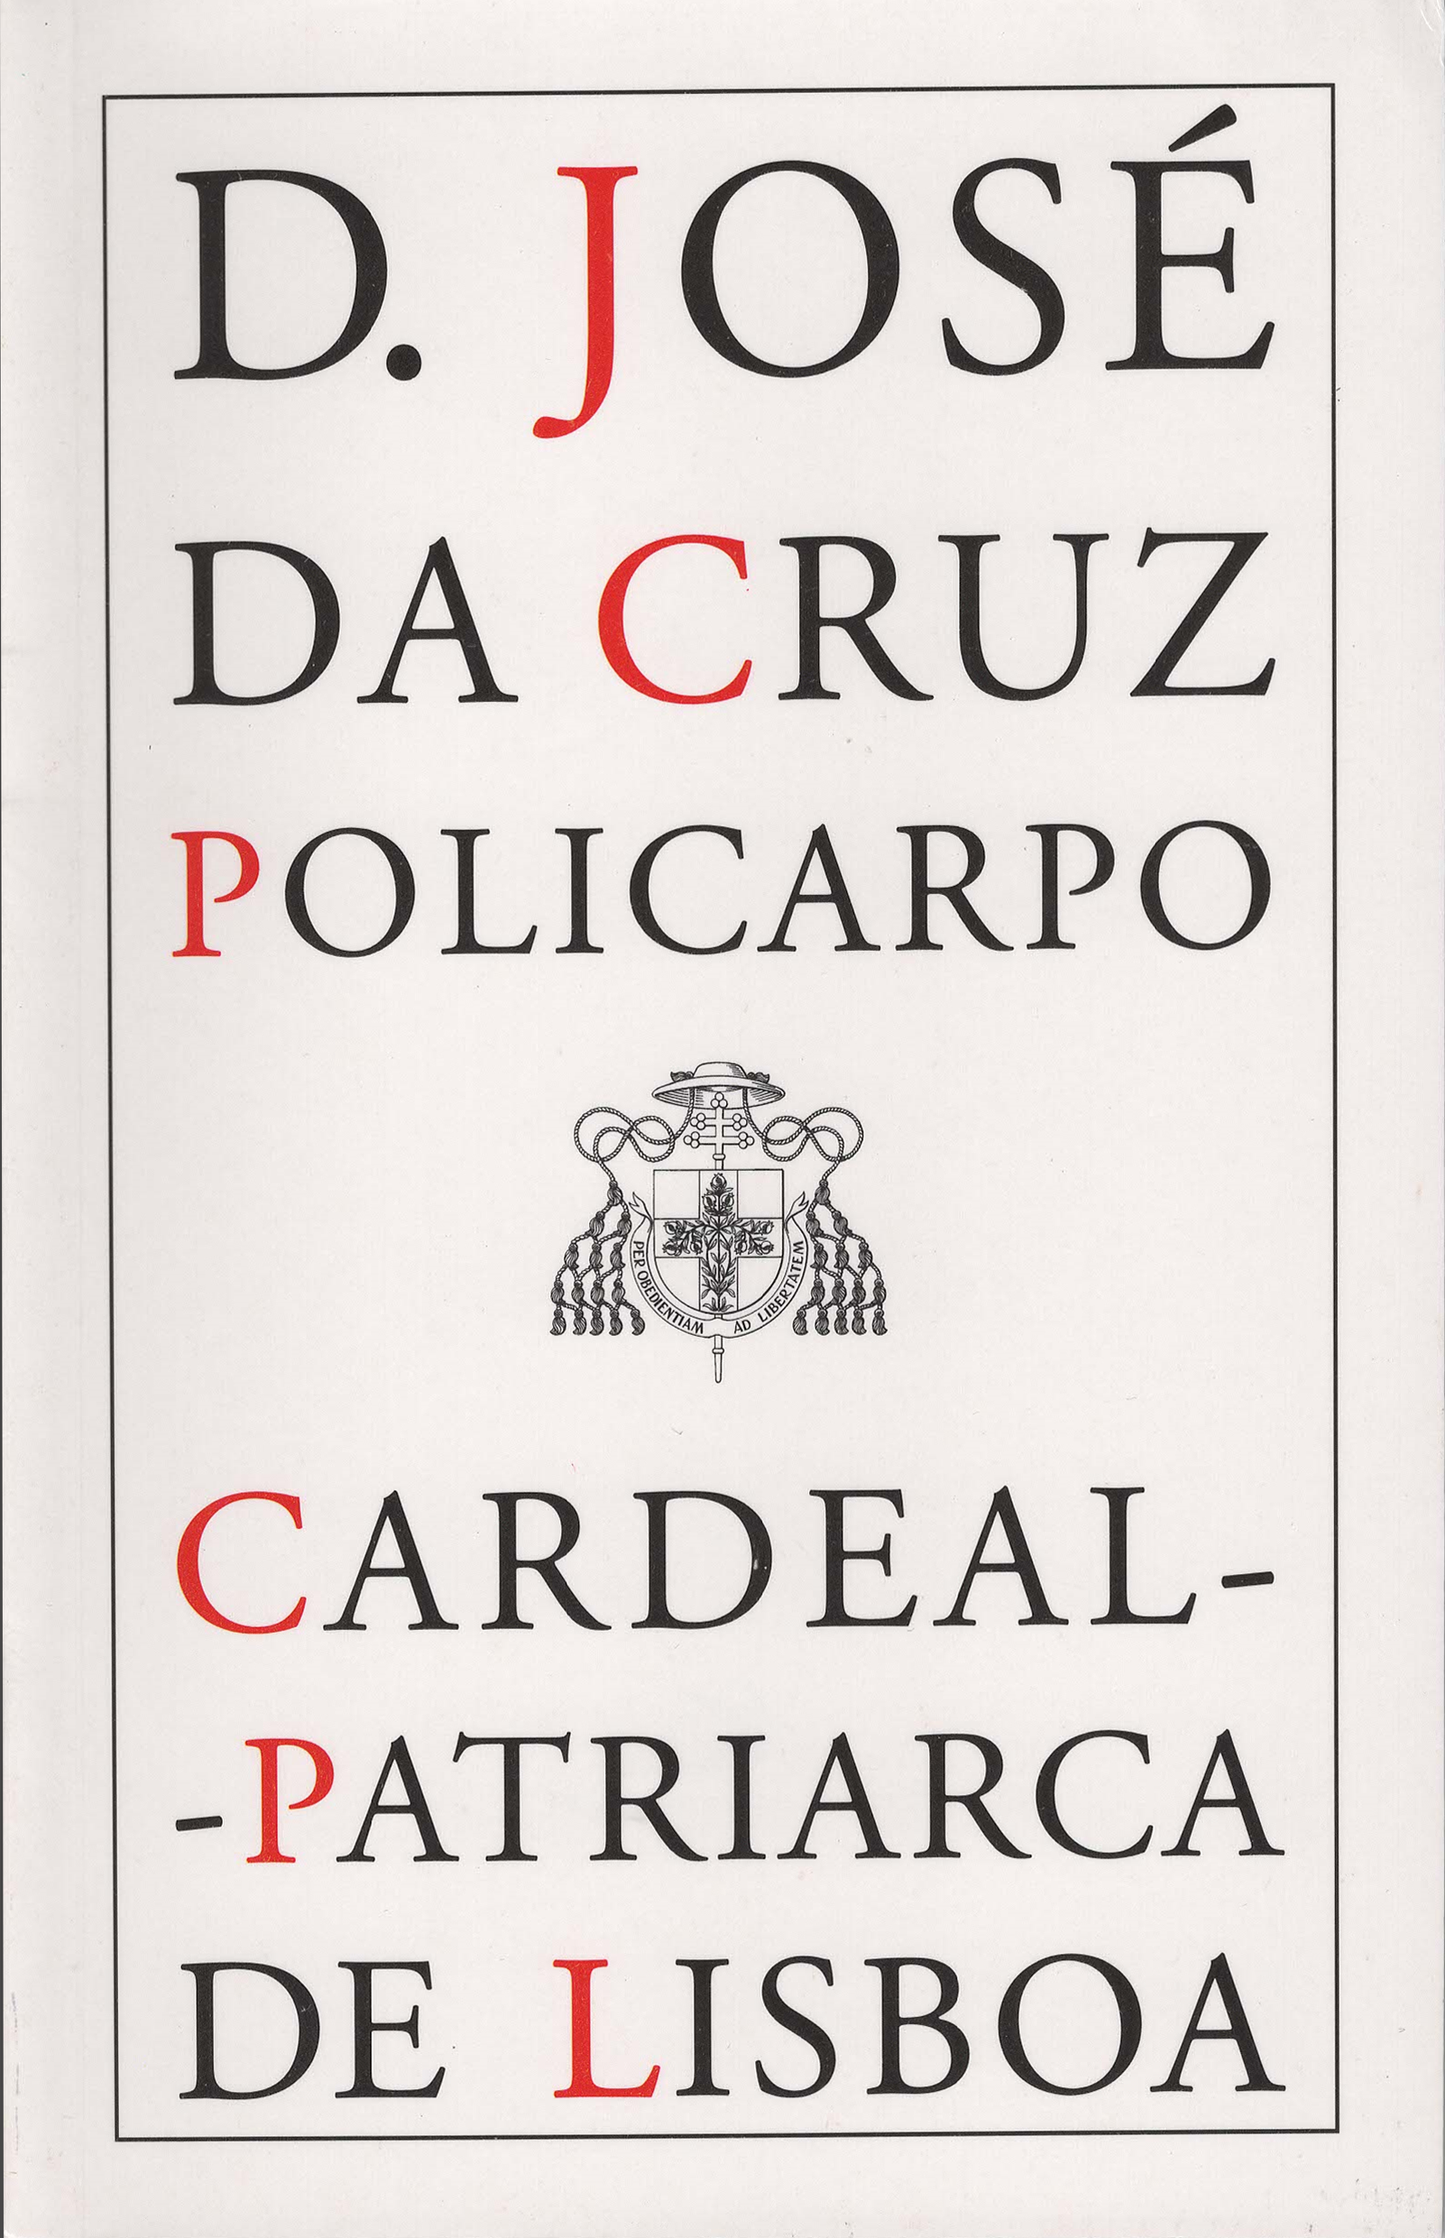 D. José da Cruz policarpo Cardeal-Patriarca de Lisboa